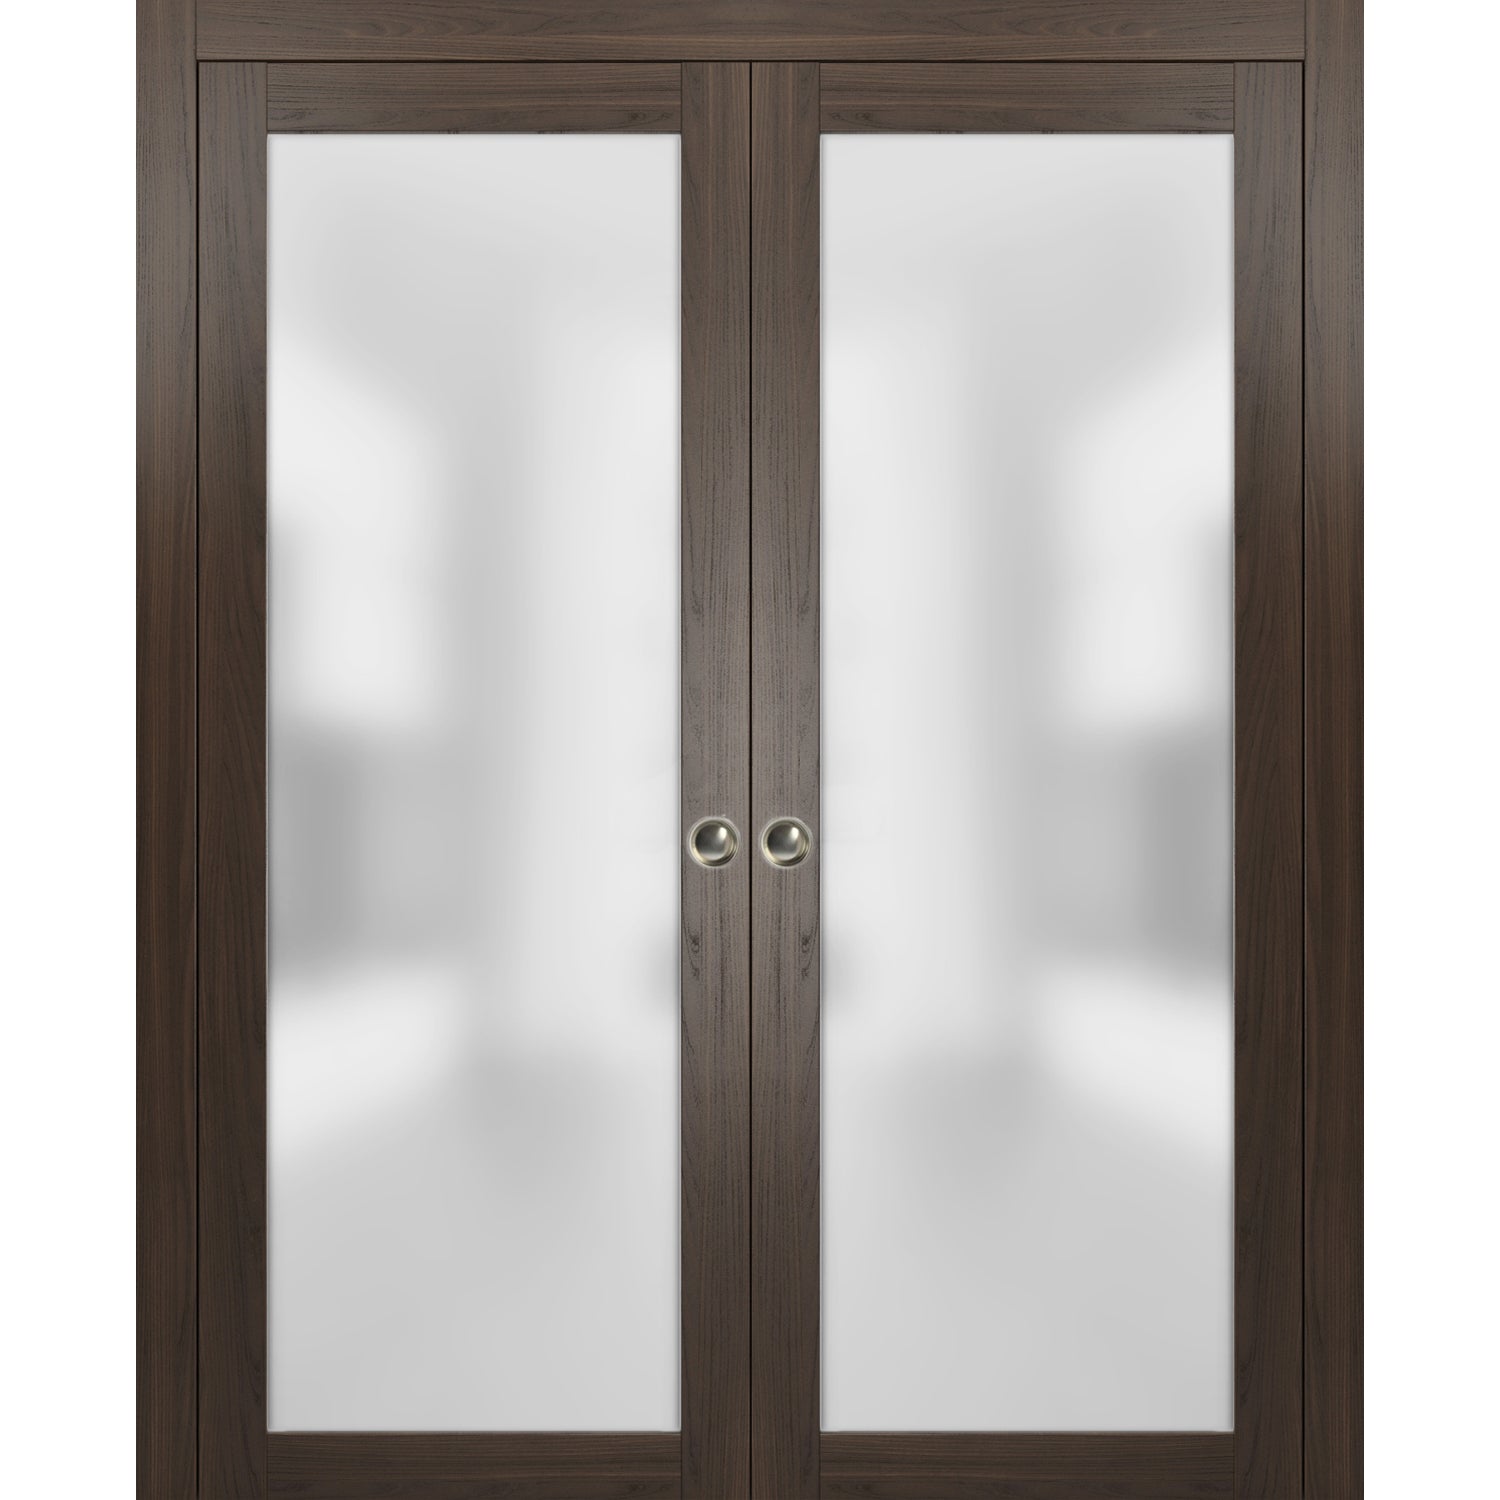 SARTODOORS Double Pocket Glass Doors 48 x 96 | Planum 2102 Chocolate Ash | Pocket Frame Rail Hardware | Wood Sliding Doors Frosted Glass |